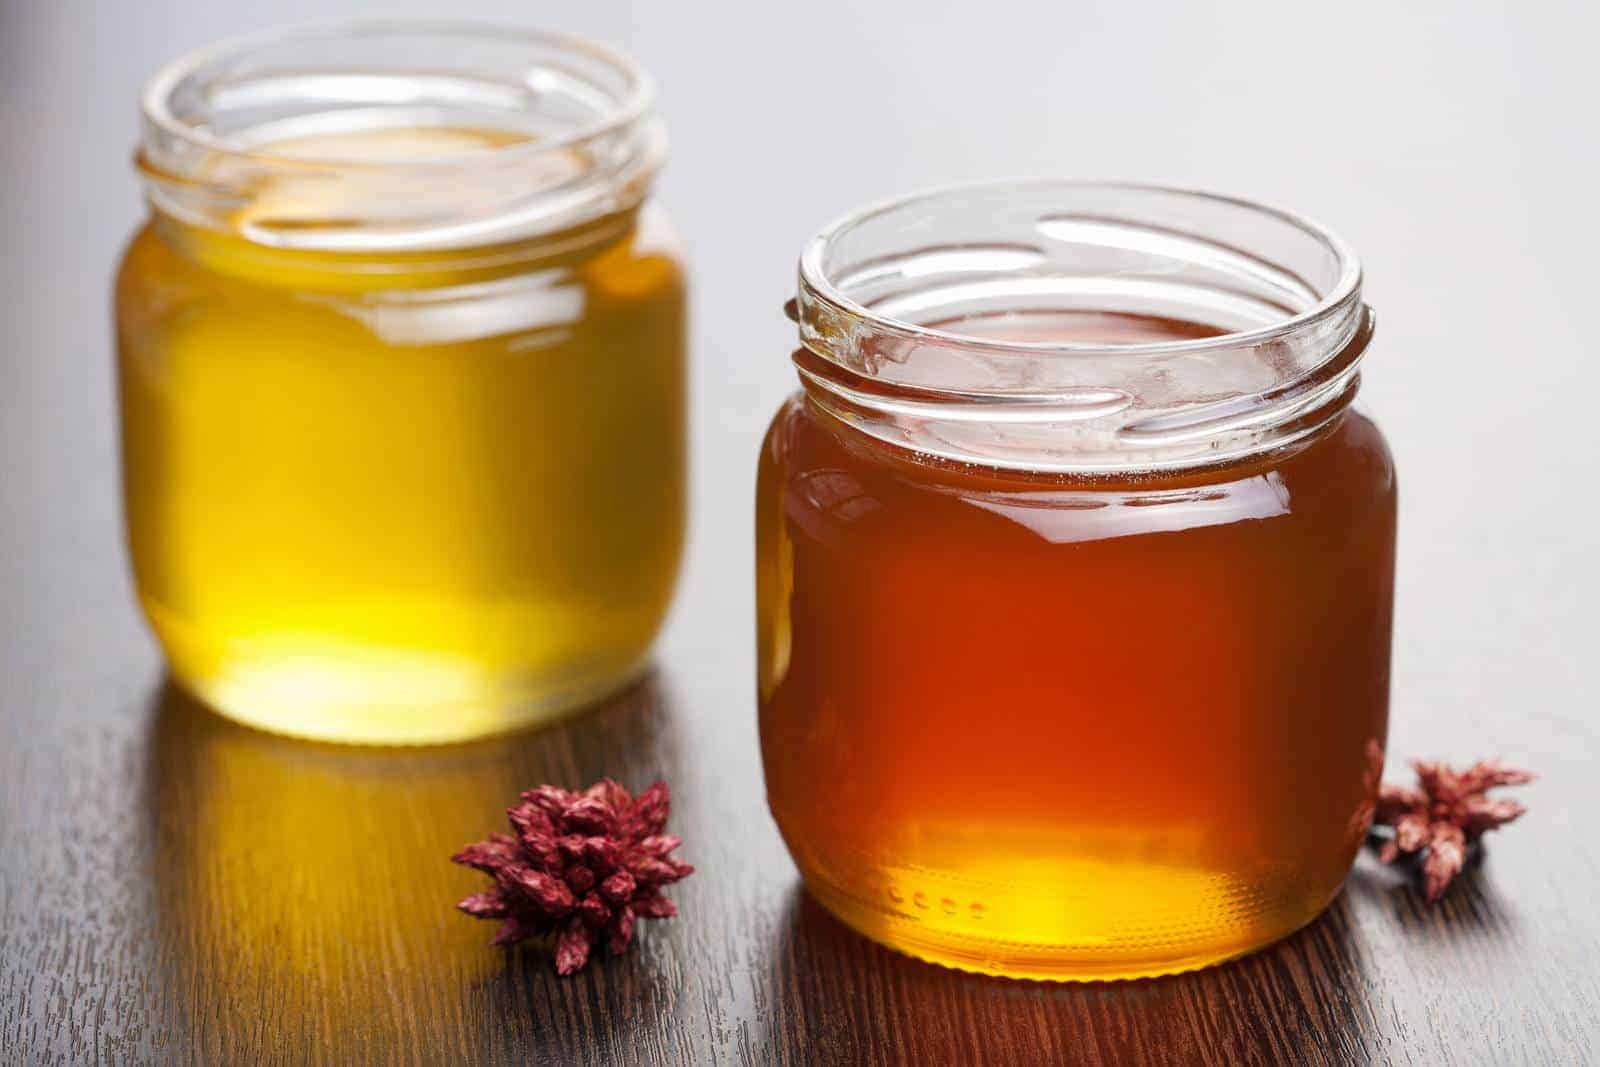 Light vs dark honey. What's the difference?